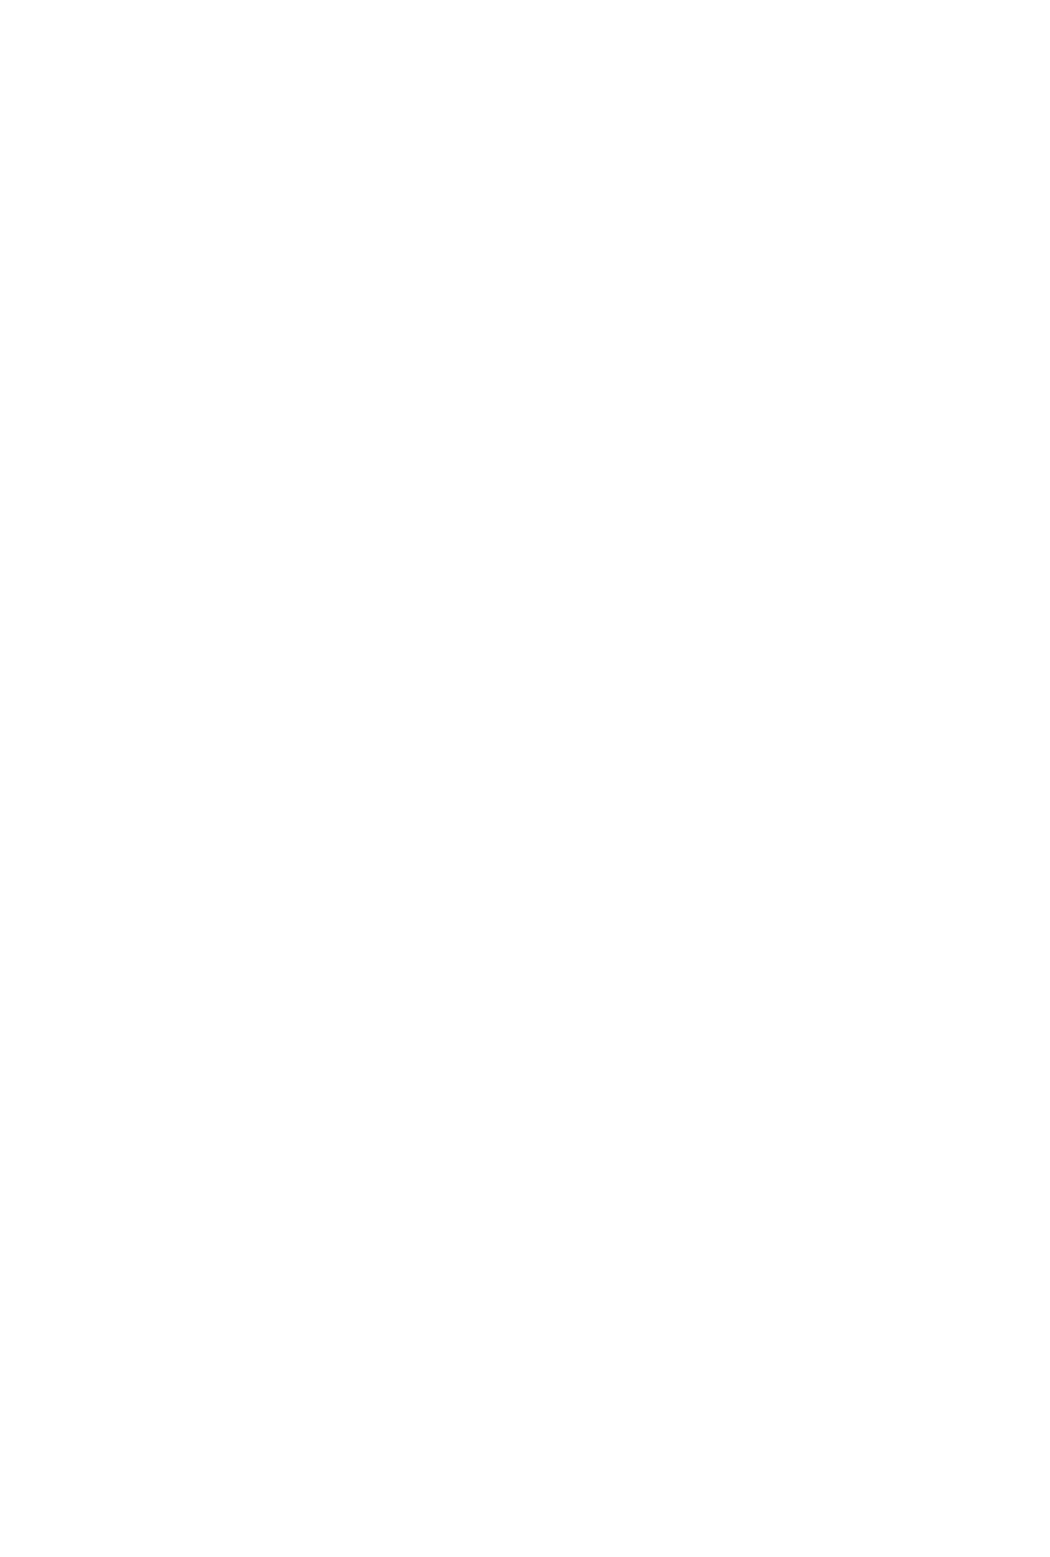 FUKUOKA PRODUCER SUMMIT 2024 ヒットメーカーから学ぶ、PRODUCERの本質